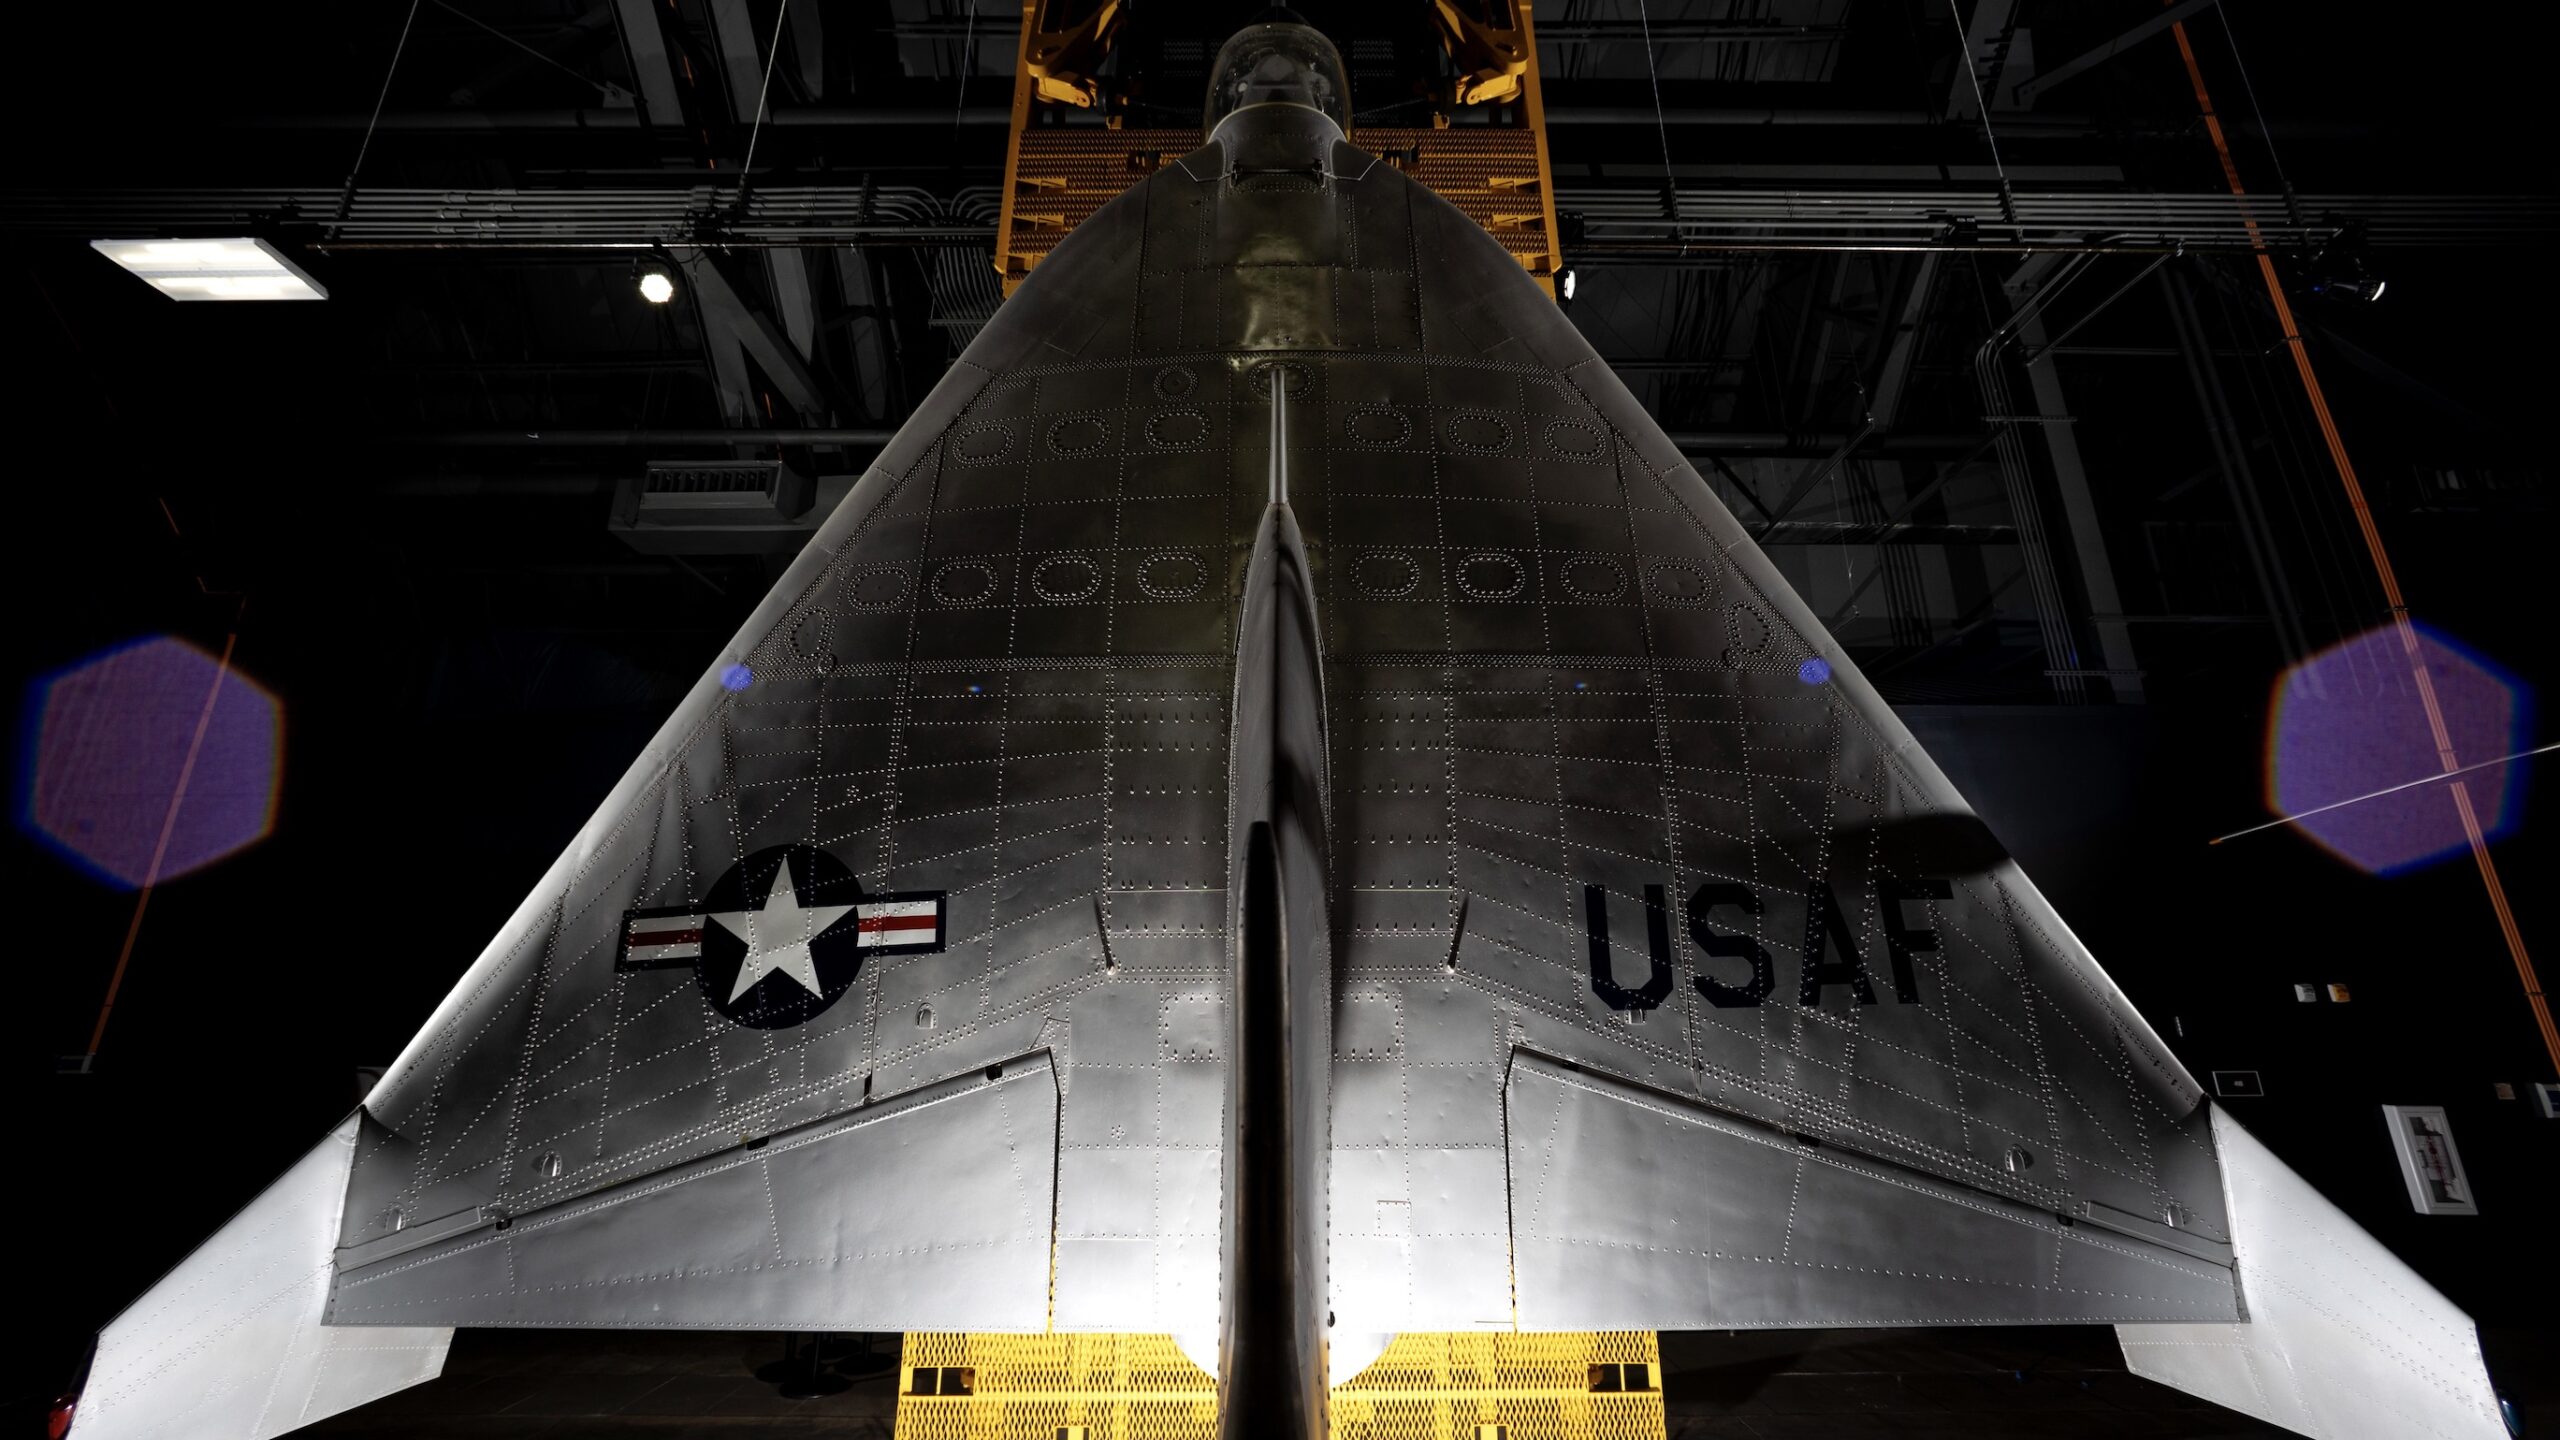 Ryan X-13 Vertijet second prototype